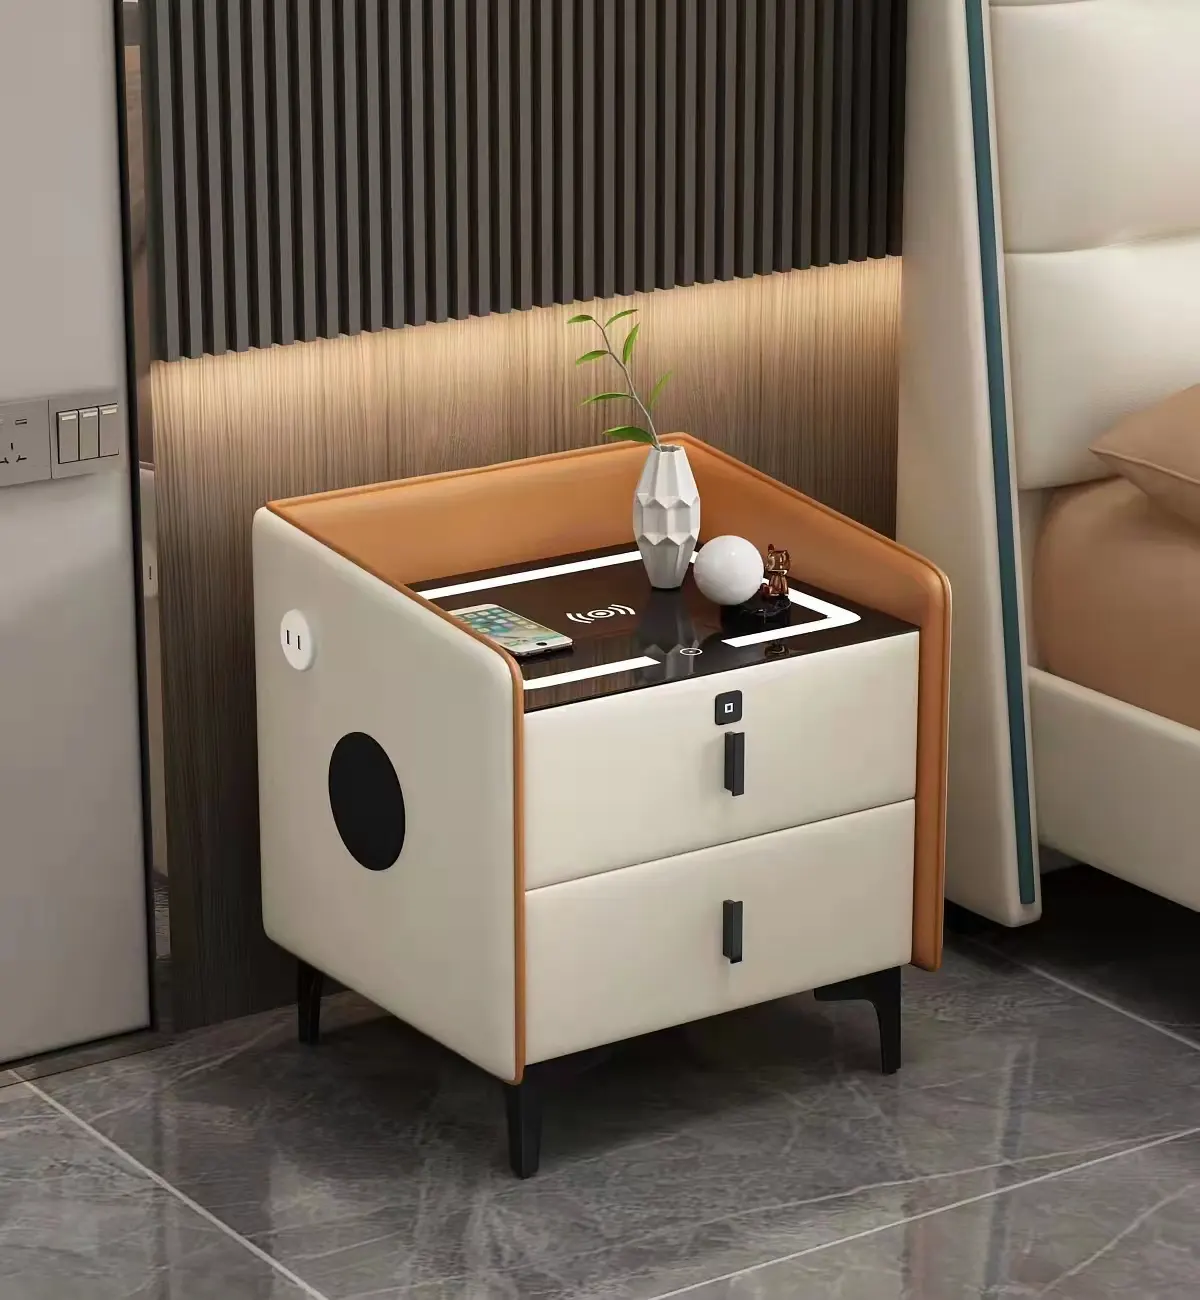 HANYEE Home Furniture Bedroom Bed Smart Side Table Bedside Table Minimalist Wireless Charging Nightstands